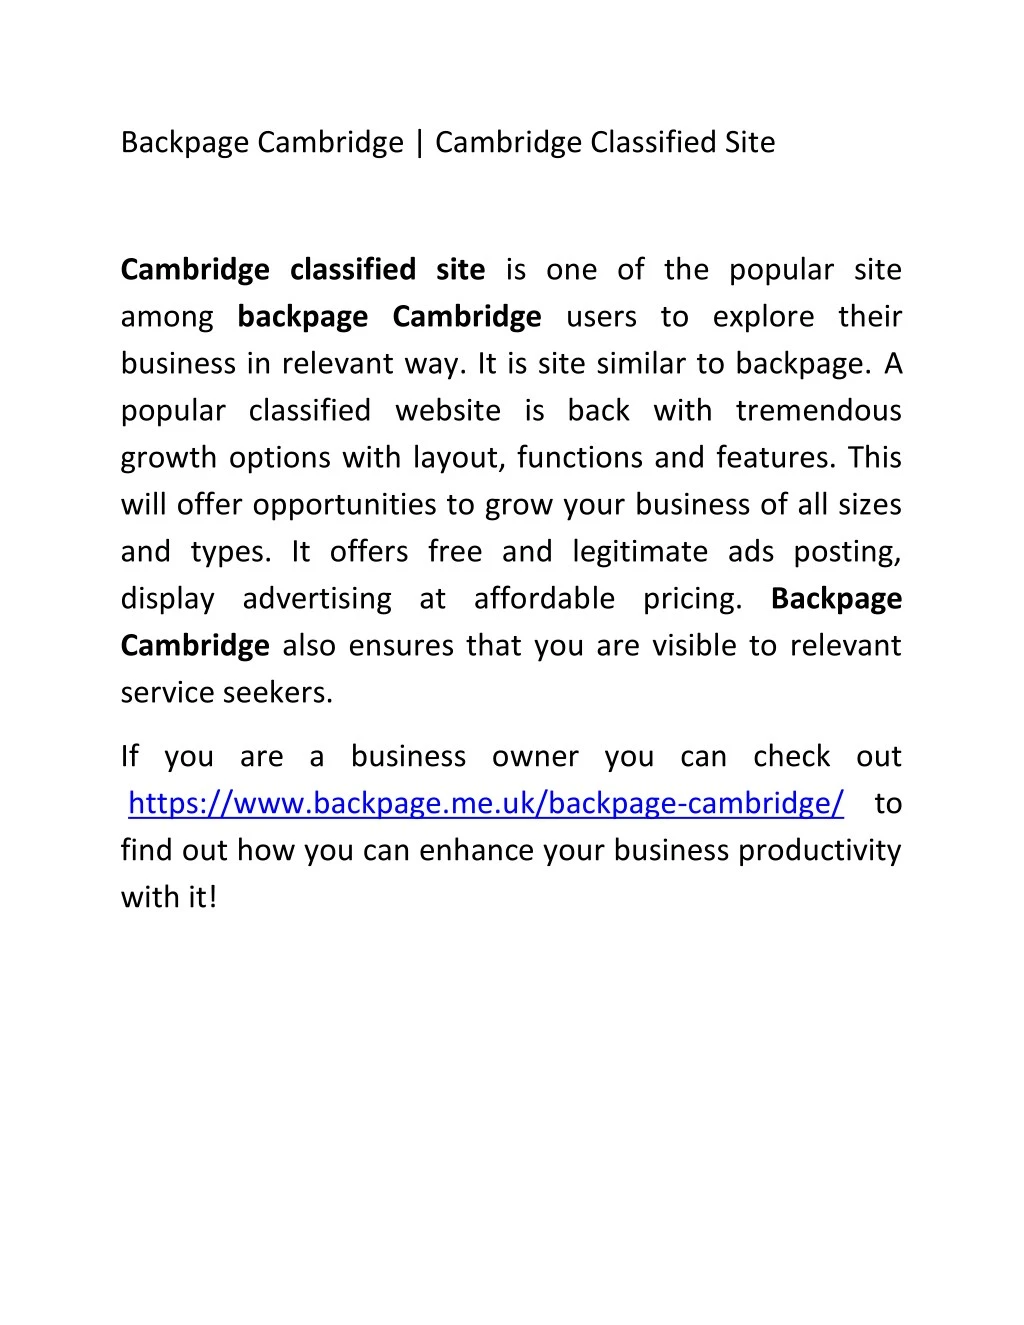 backpage cambridge cambridge classified site